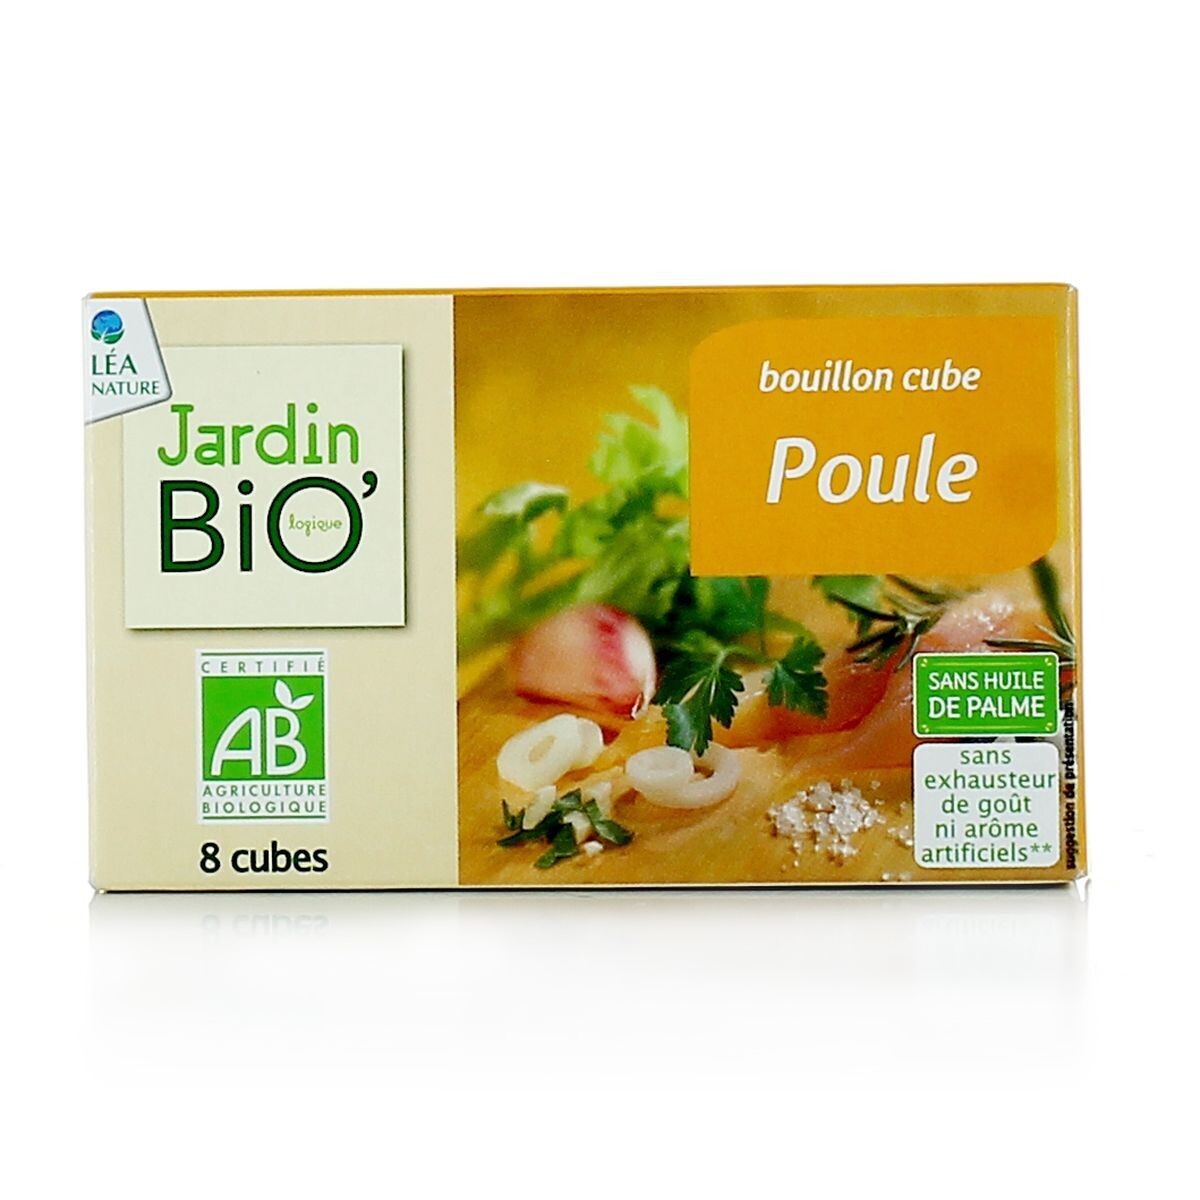 Bouillon Cube Poule (Box) - Jardin Bio